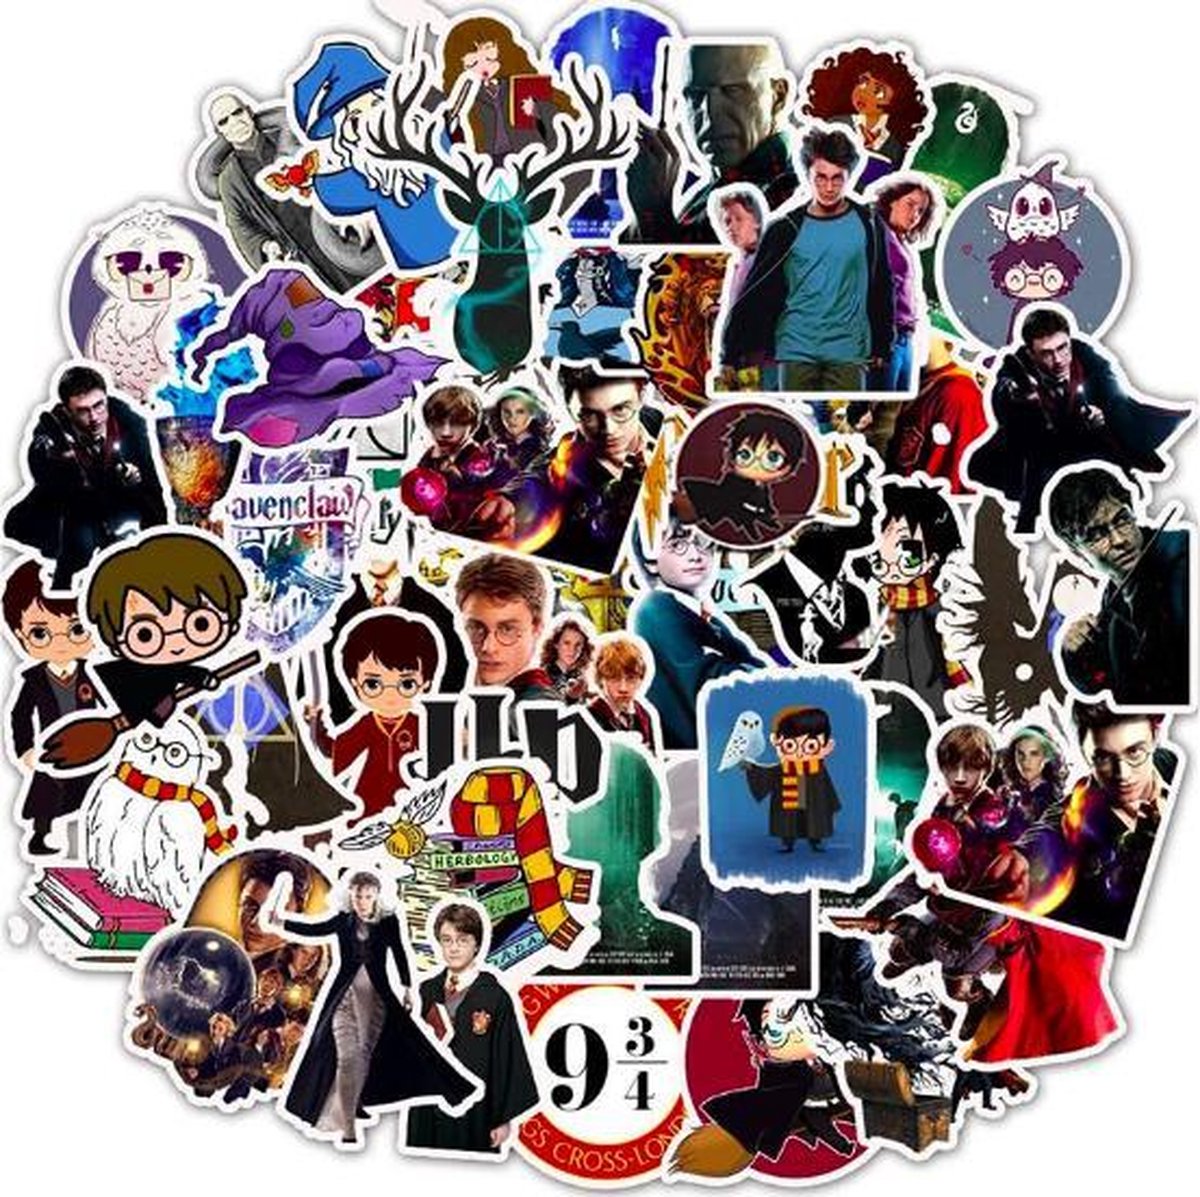 ProductGoods - 50 Stuks Harry Potter Stickers - Muur Decoratie - Koffer Decoratie - Laptop Decoratie - Koelkast Decoratie - Stickervellen - Harry Potter Stickers - ProductGoods